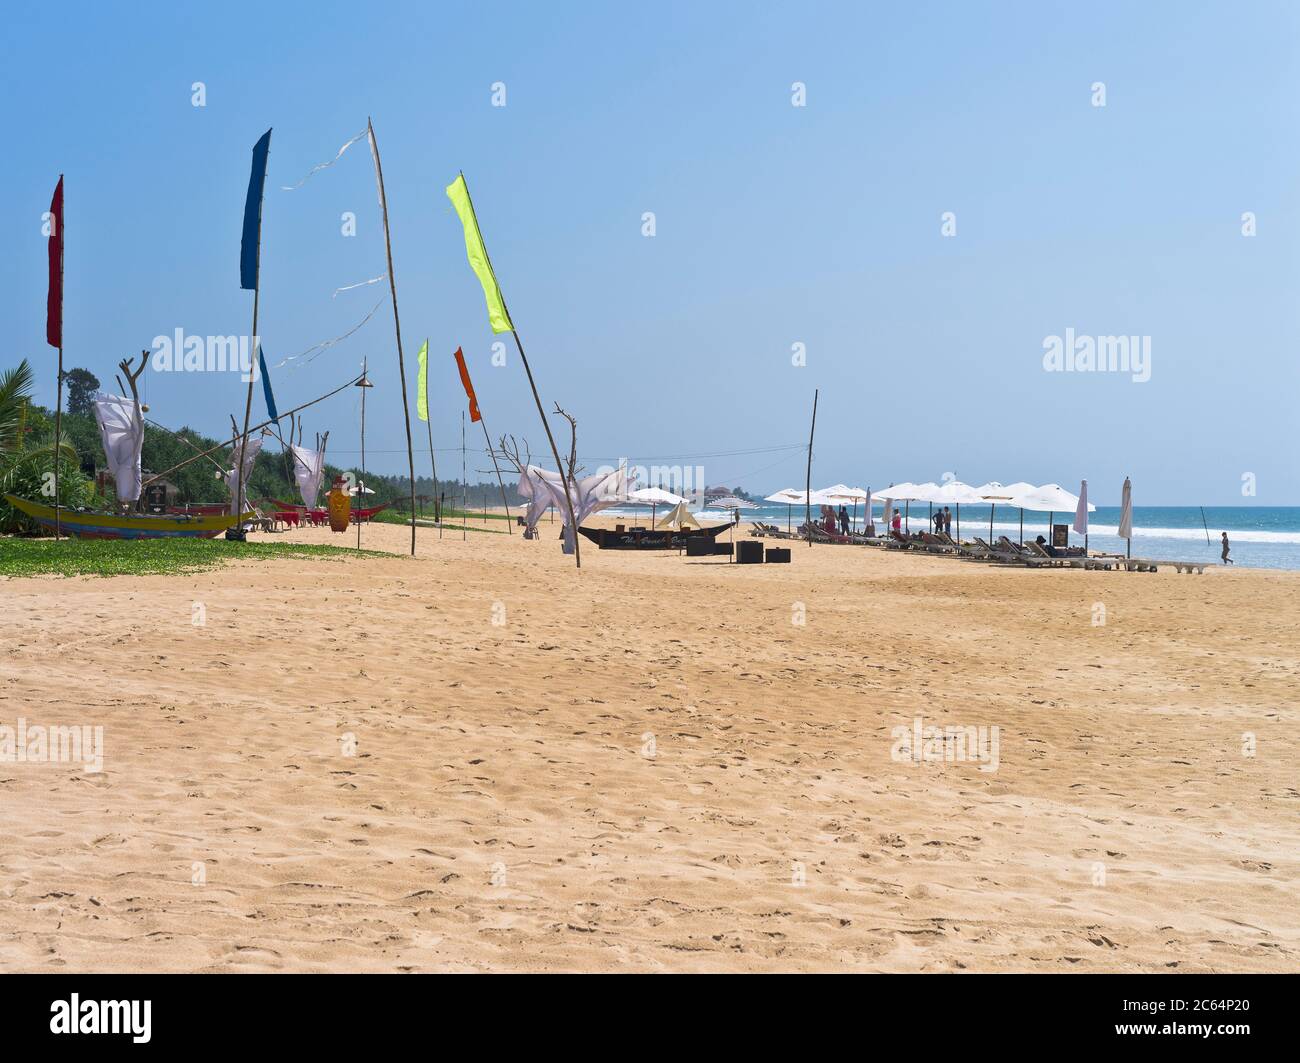 dh Robolgoda Beach Galle Road BENTOTA SRI LANKA Sri Lankan West coast hotel beaches flags sand shore Stock Photo